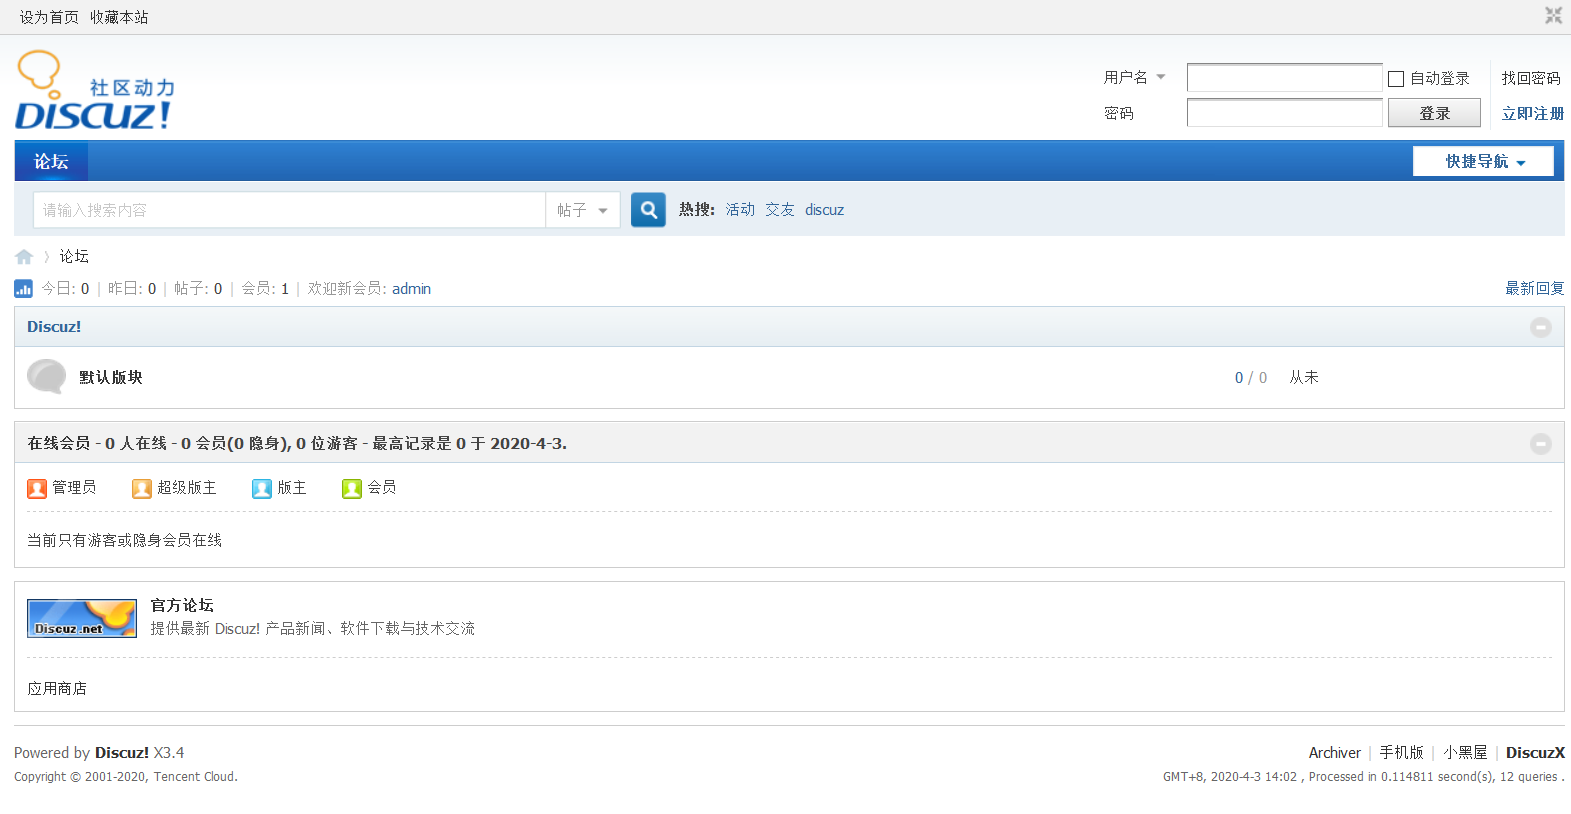 Viewforum php f forum. Boyxzeed2 similar. Boyxzeed Discuz. Форум php. Boyxzeed Chinese.